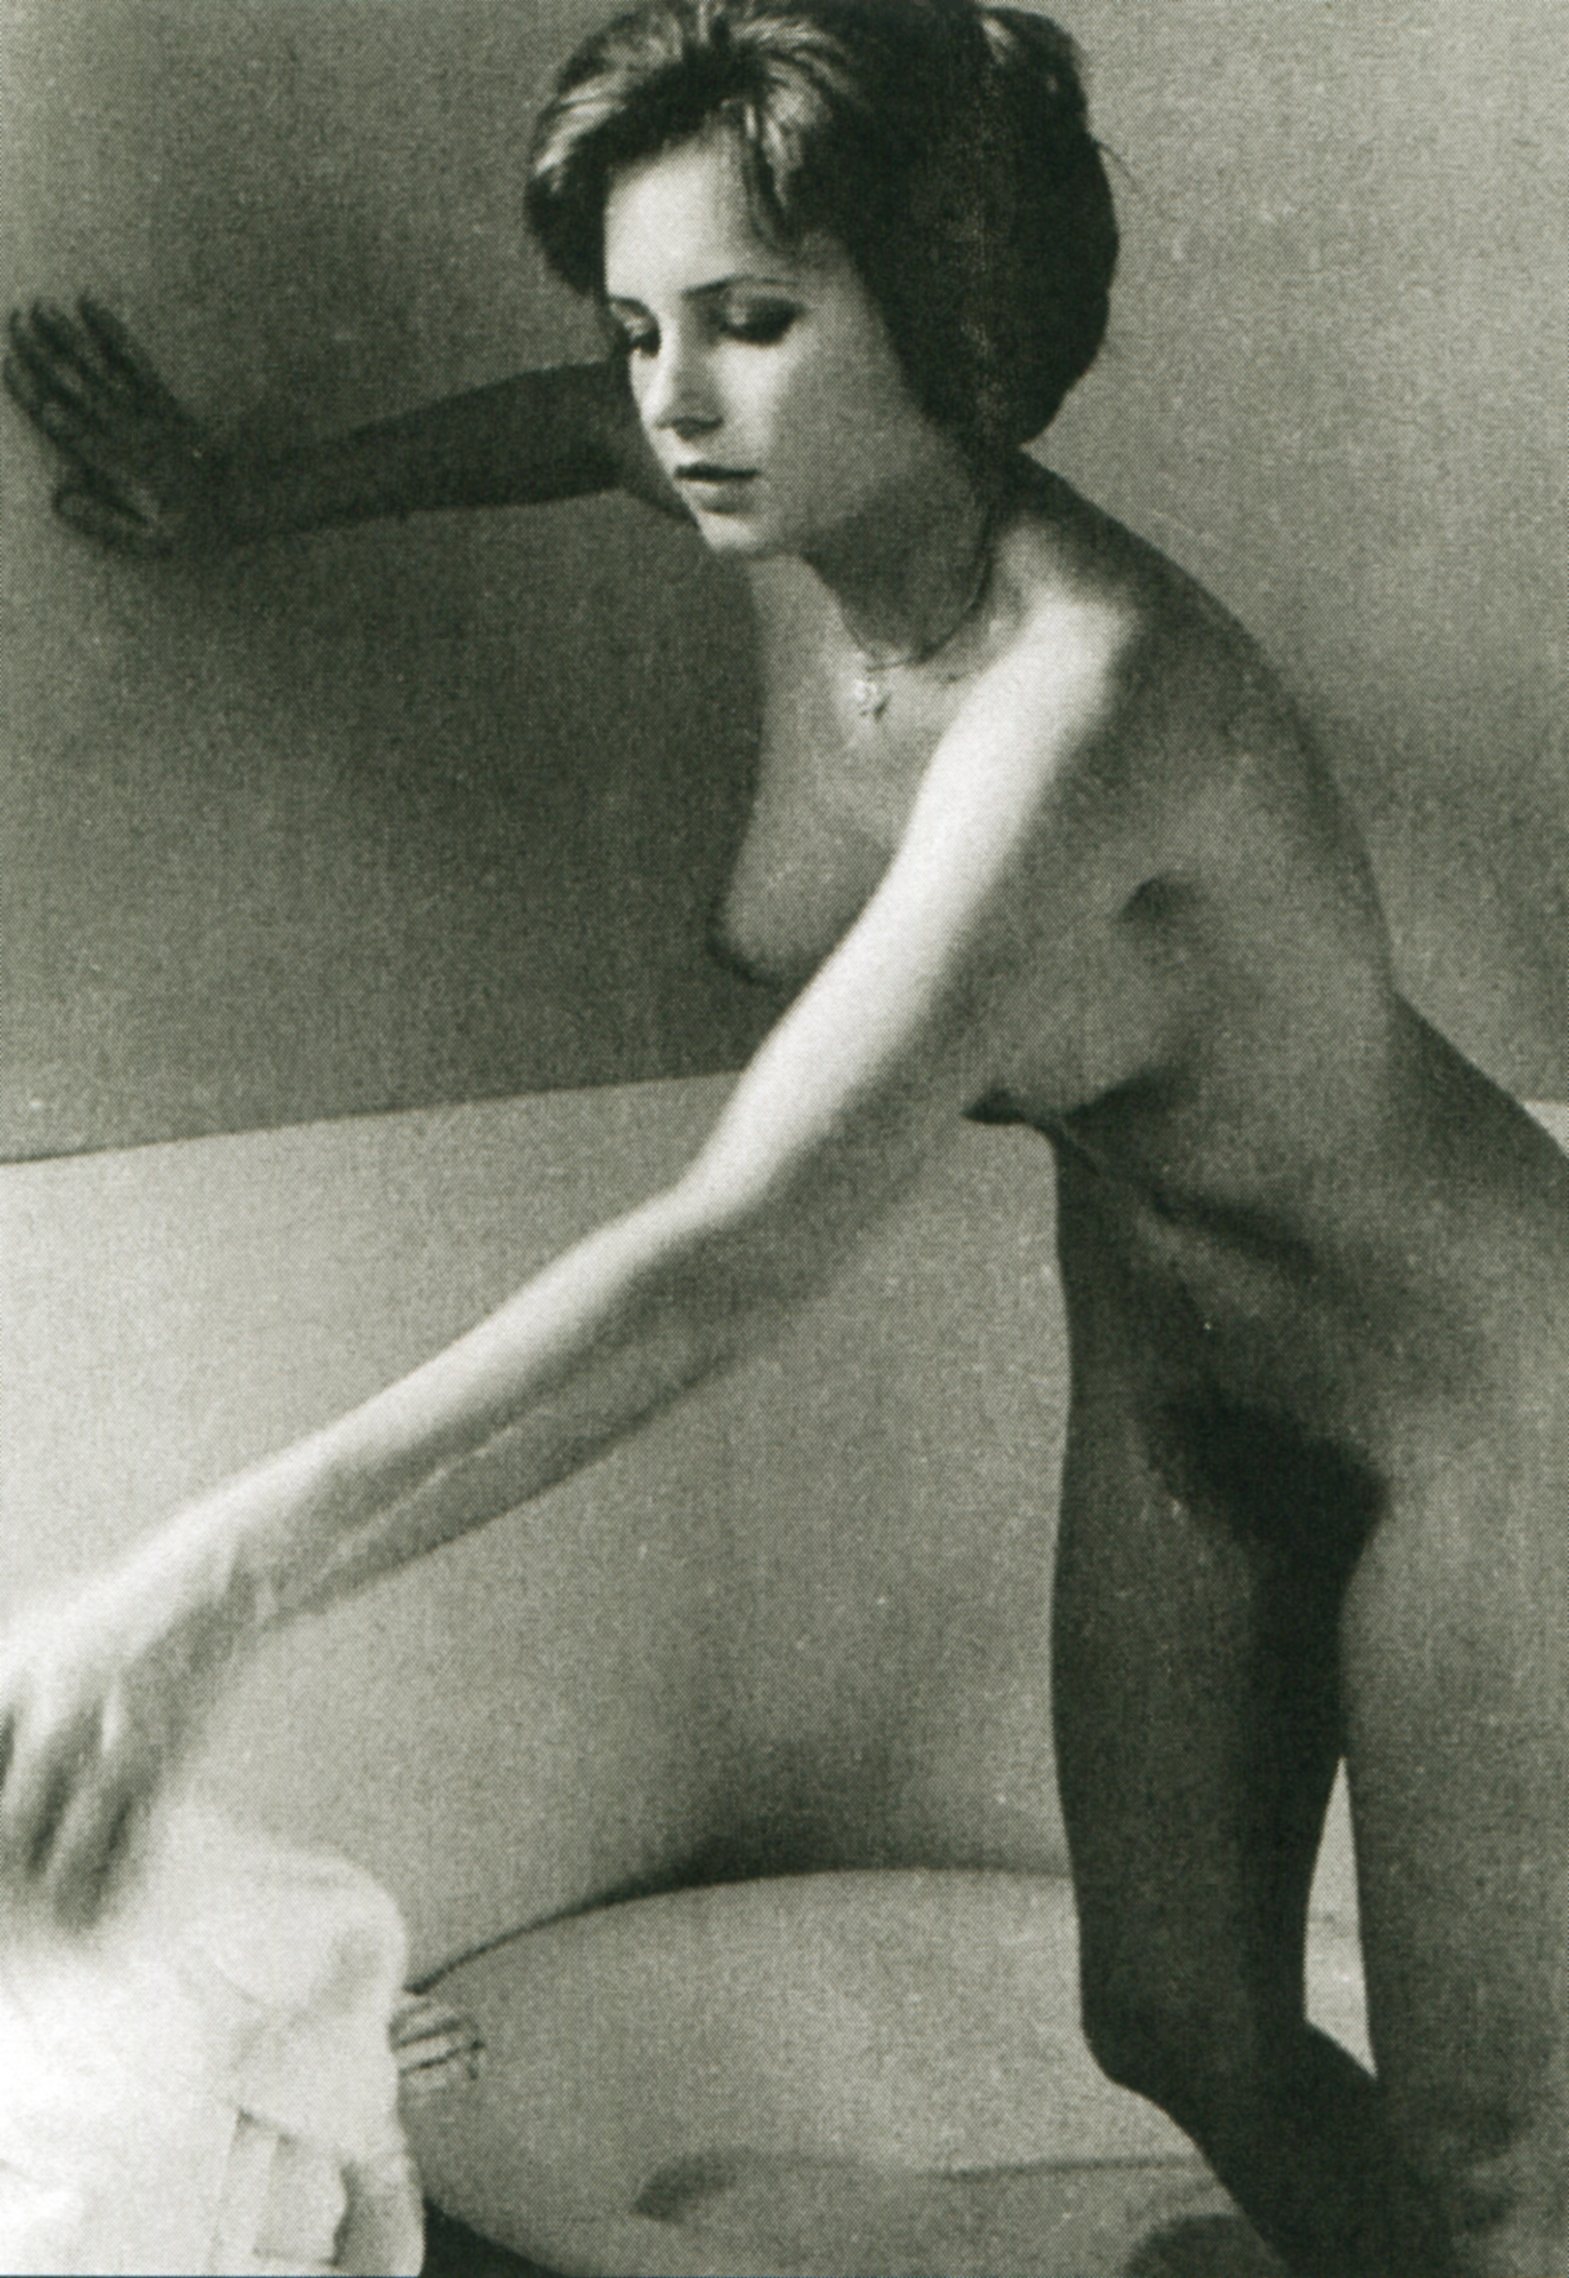 Irene Miracle nude pics.